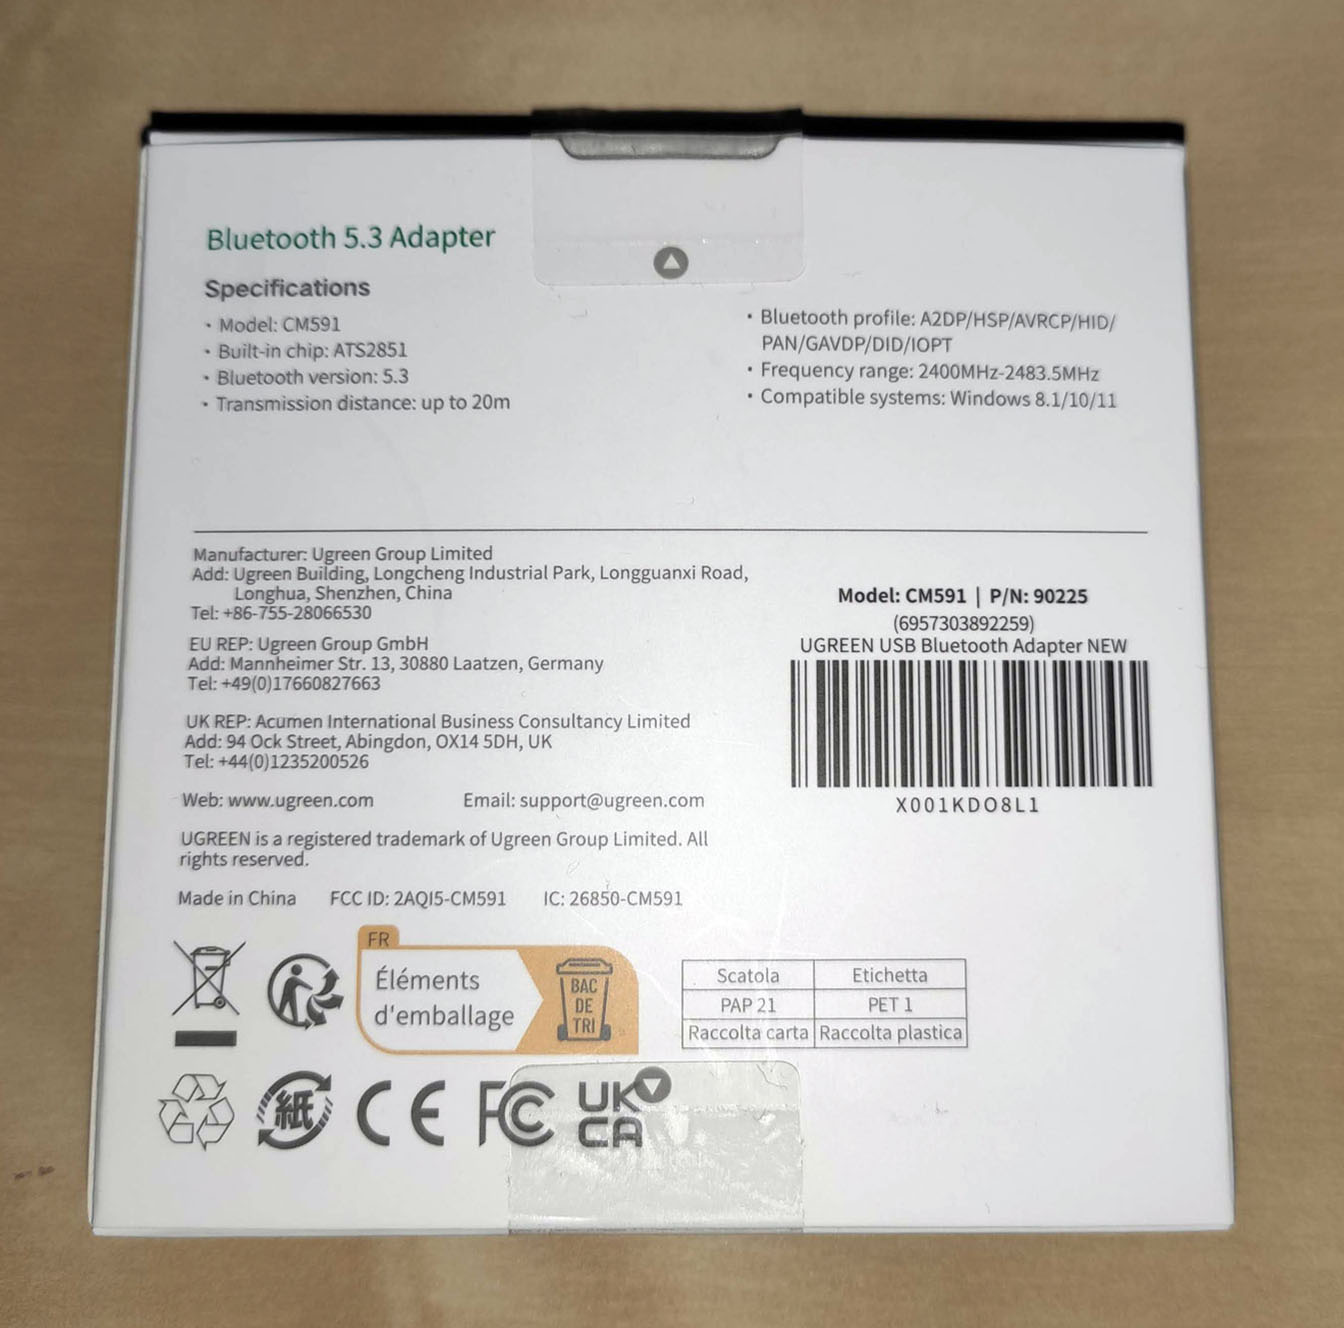 UGREEN Bluetooth 5.3 Adapter - Review